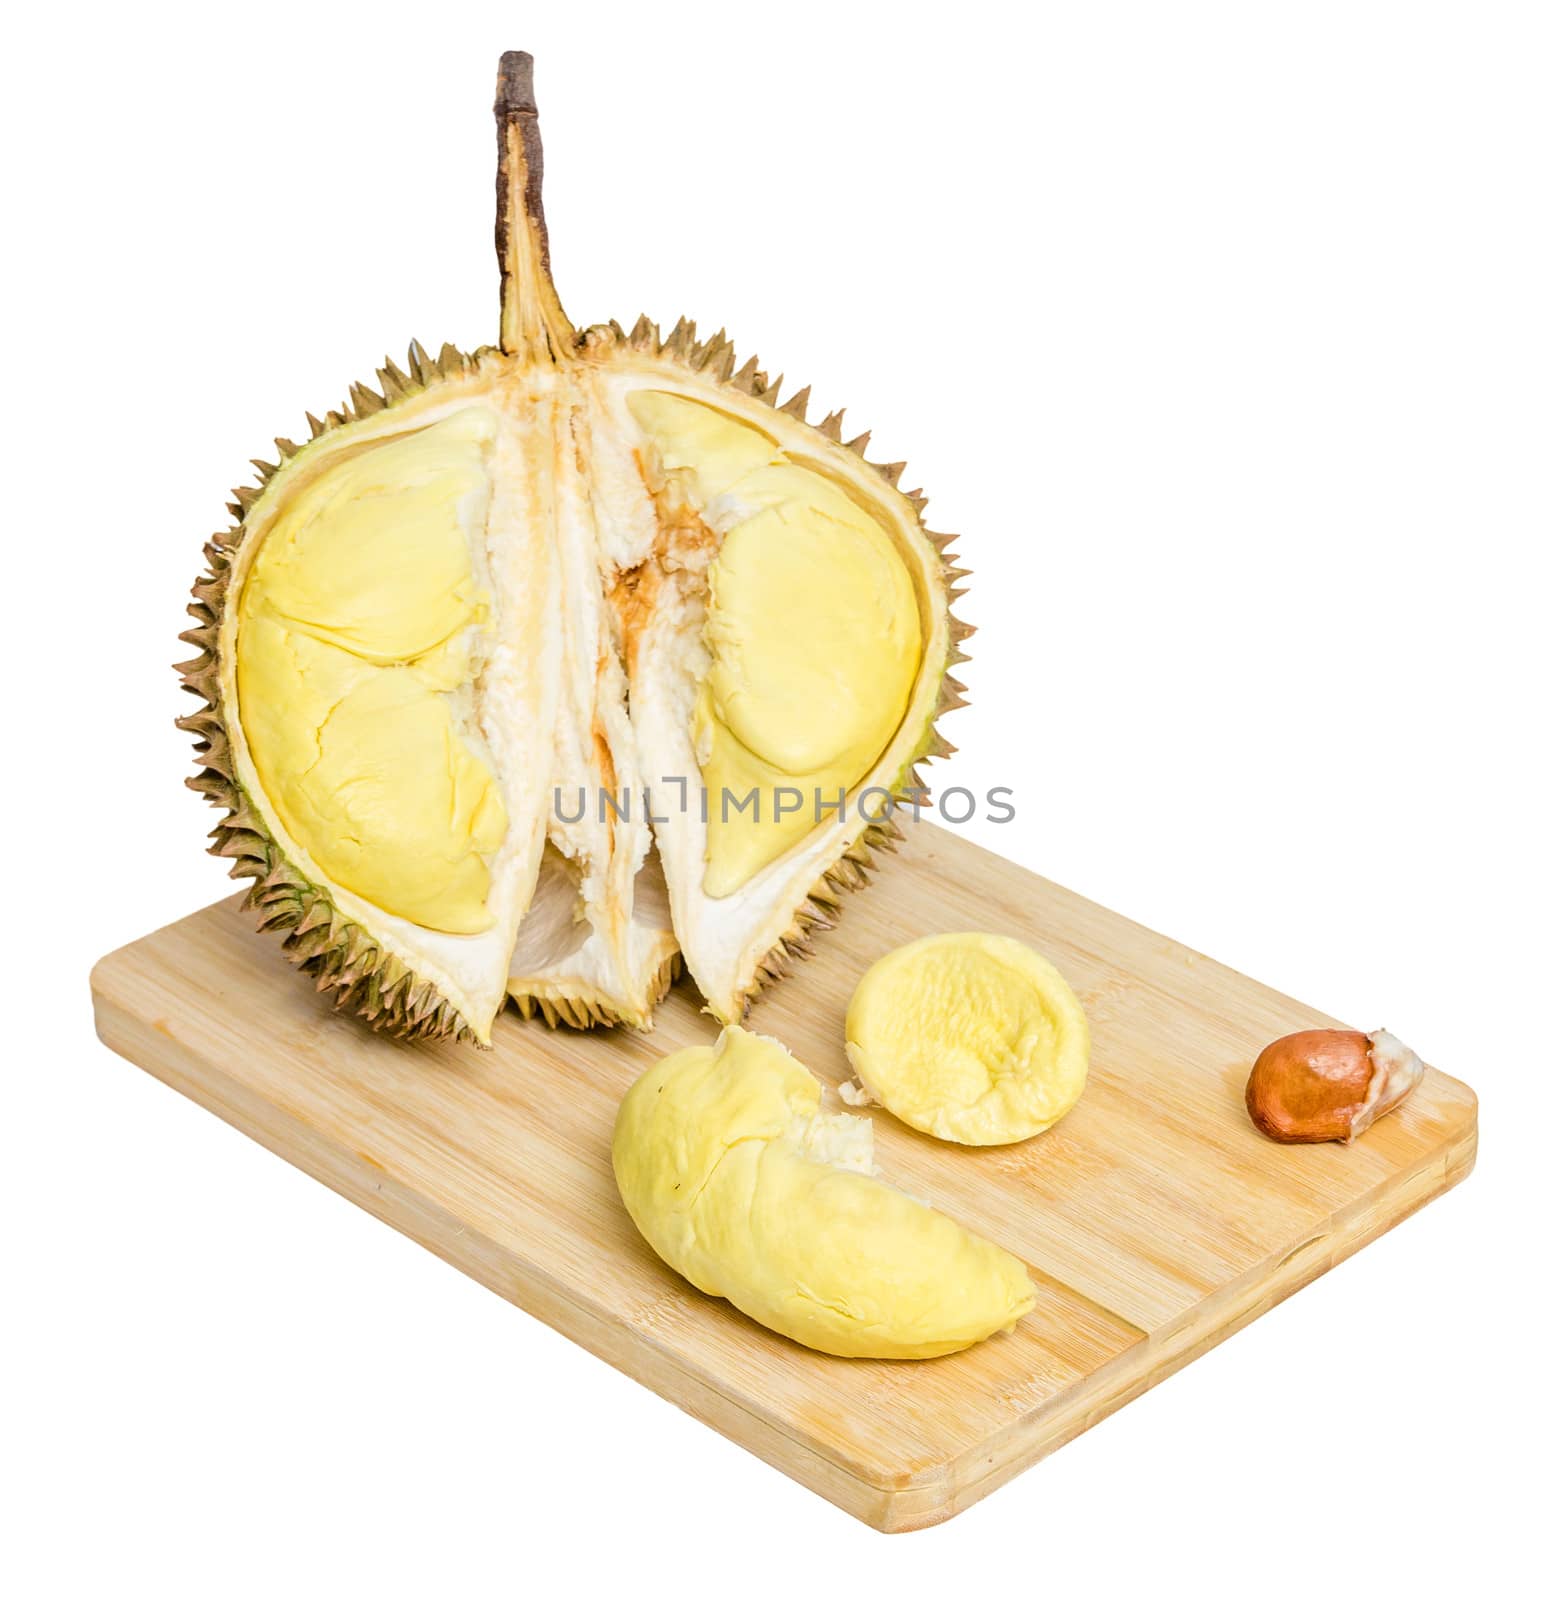 Durian. Giant Tropical Fruit. by kefiiir